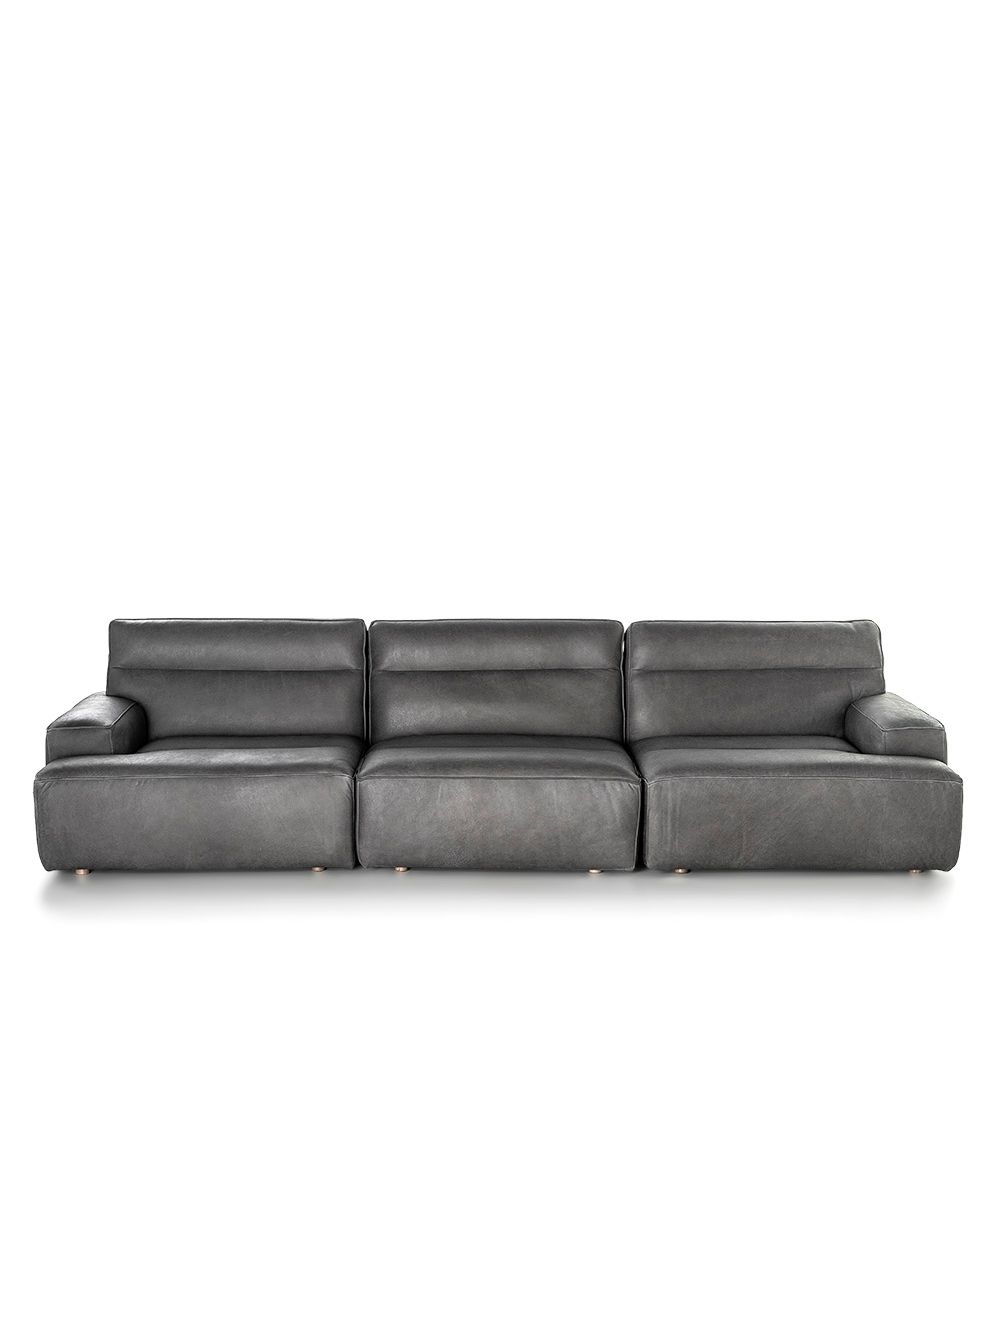 Sofa-3-cuerpos-cuero-gris-SOFA-SUMO-TIPPED-GRAPHITO-Landmark-0